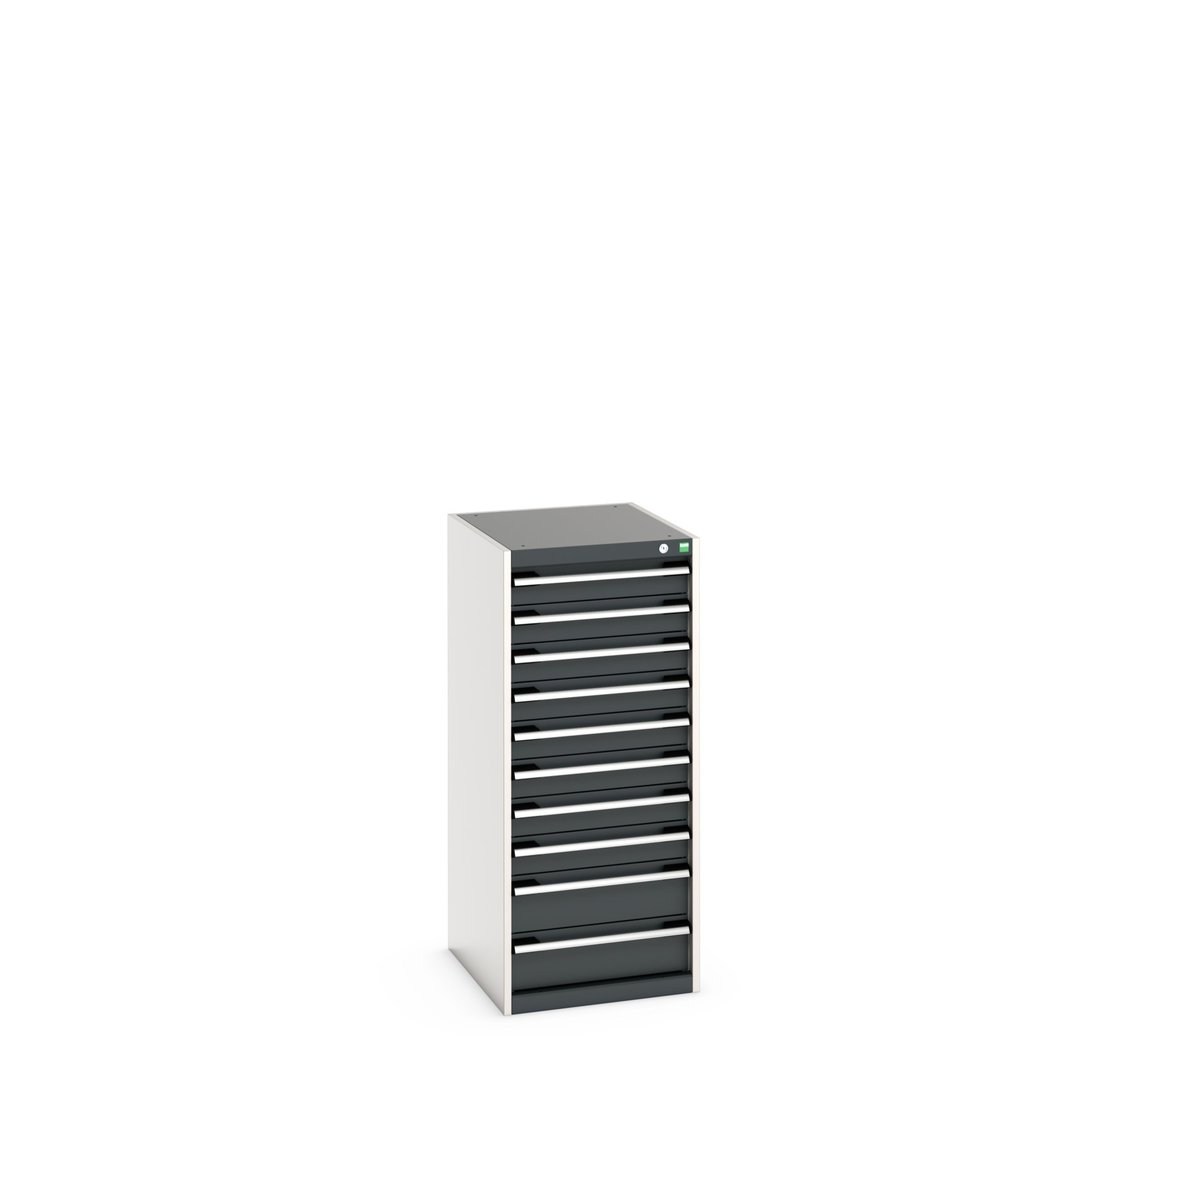 40018073. - cubio drawer cabinet